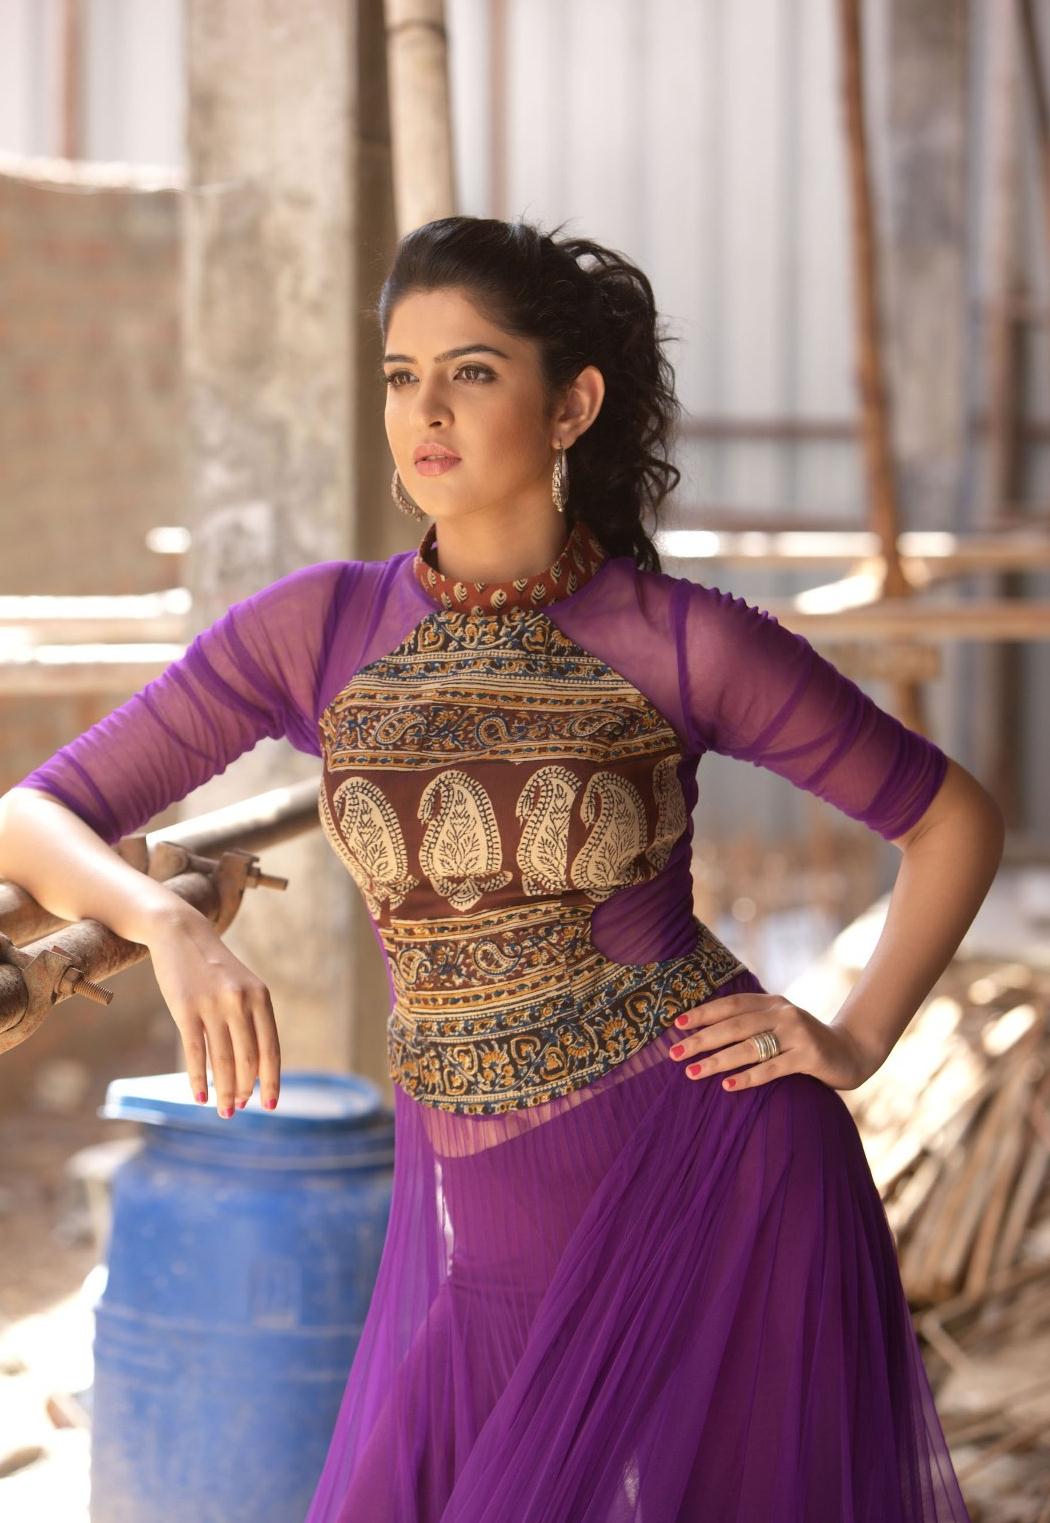 deeksha seth wallpaper,purple,clothing,abdomen,sari,trunk